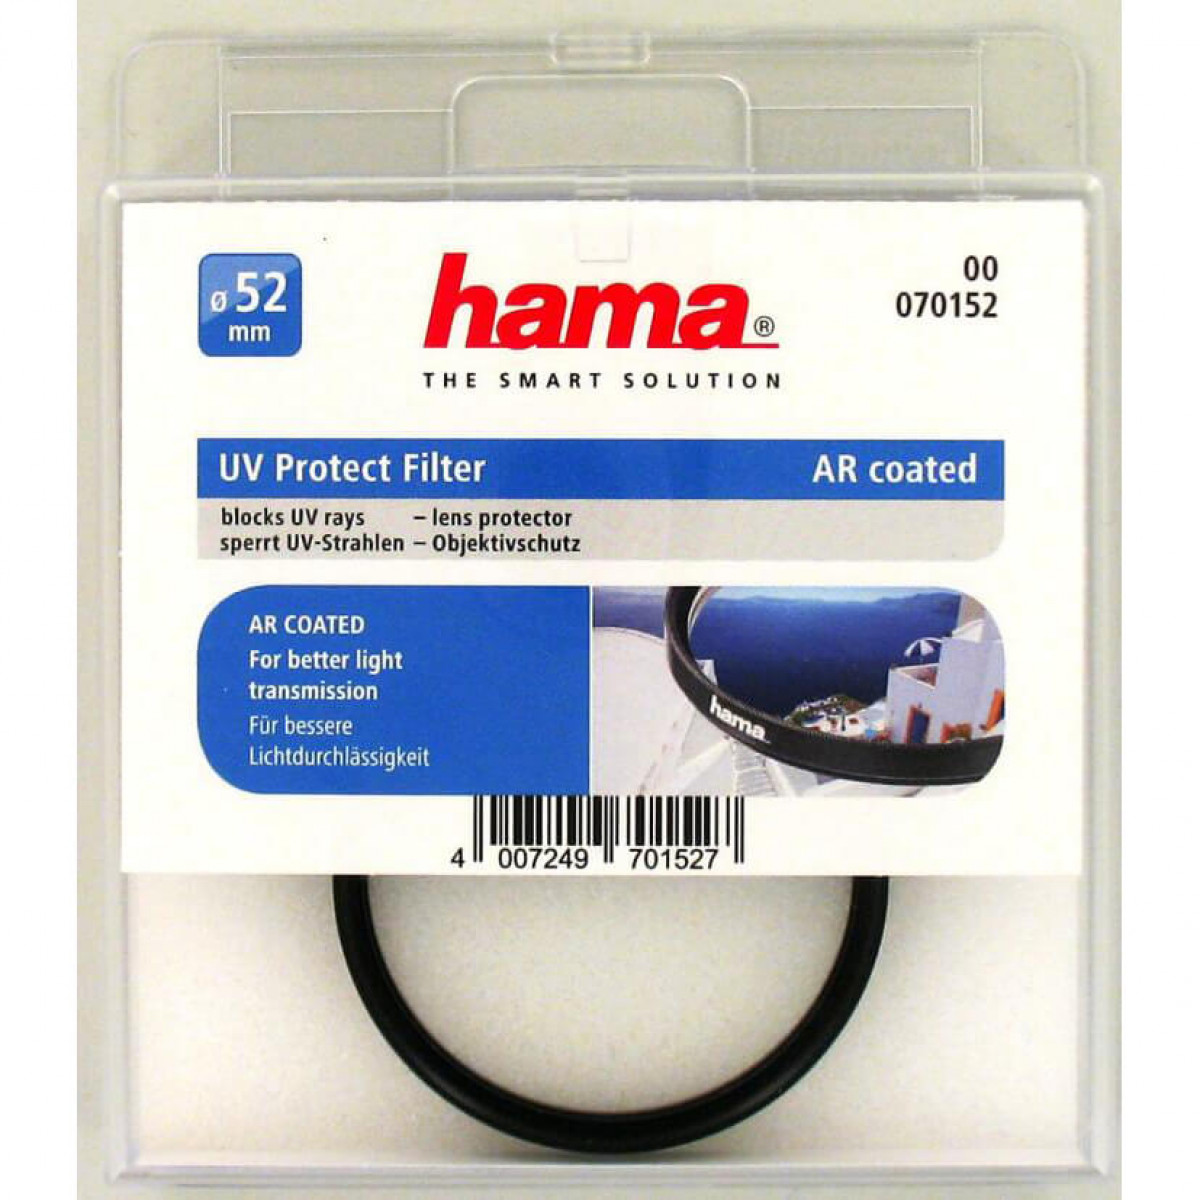 HAMA AR coated, mm mm UV-Filter 52,0 52